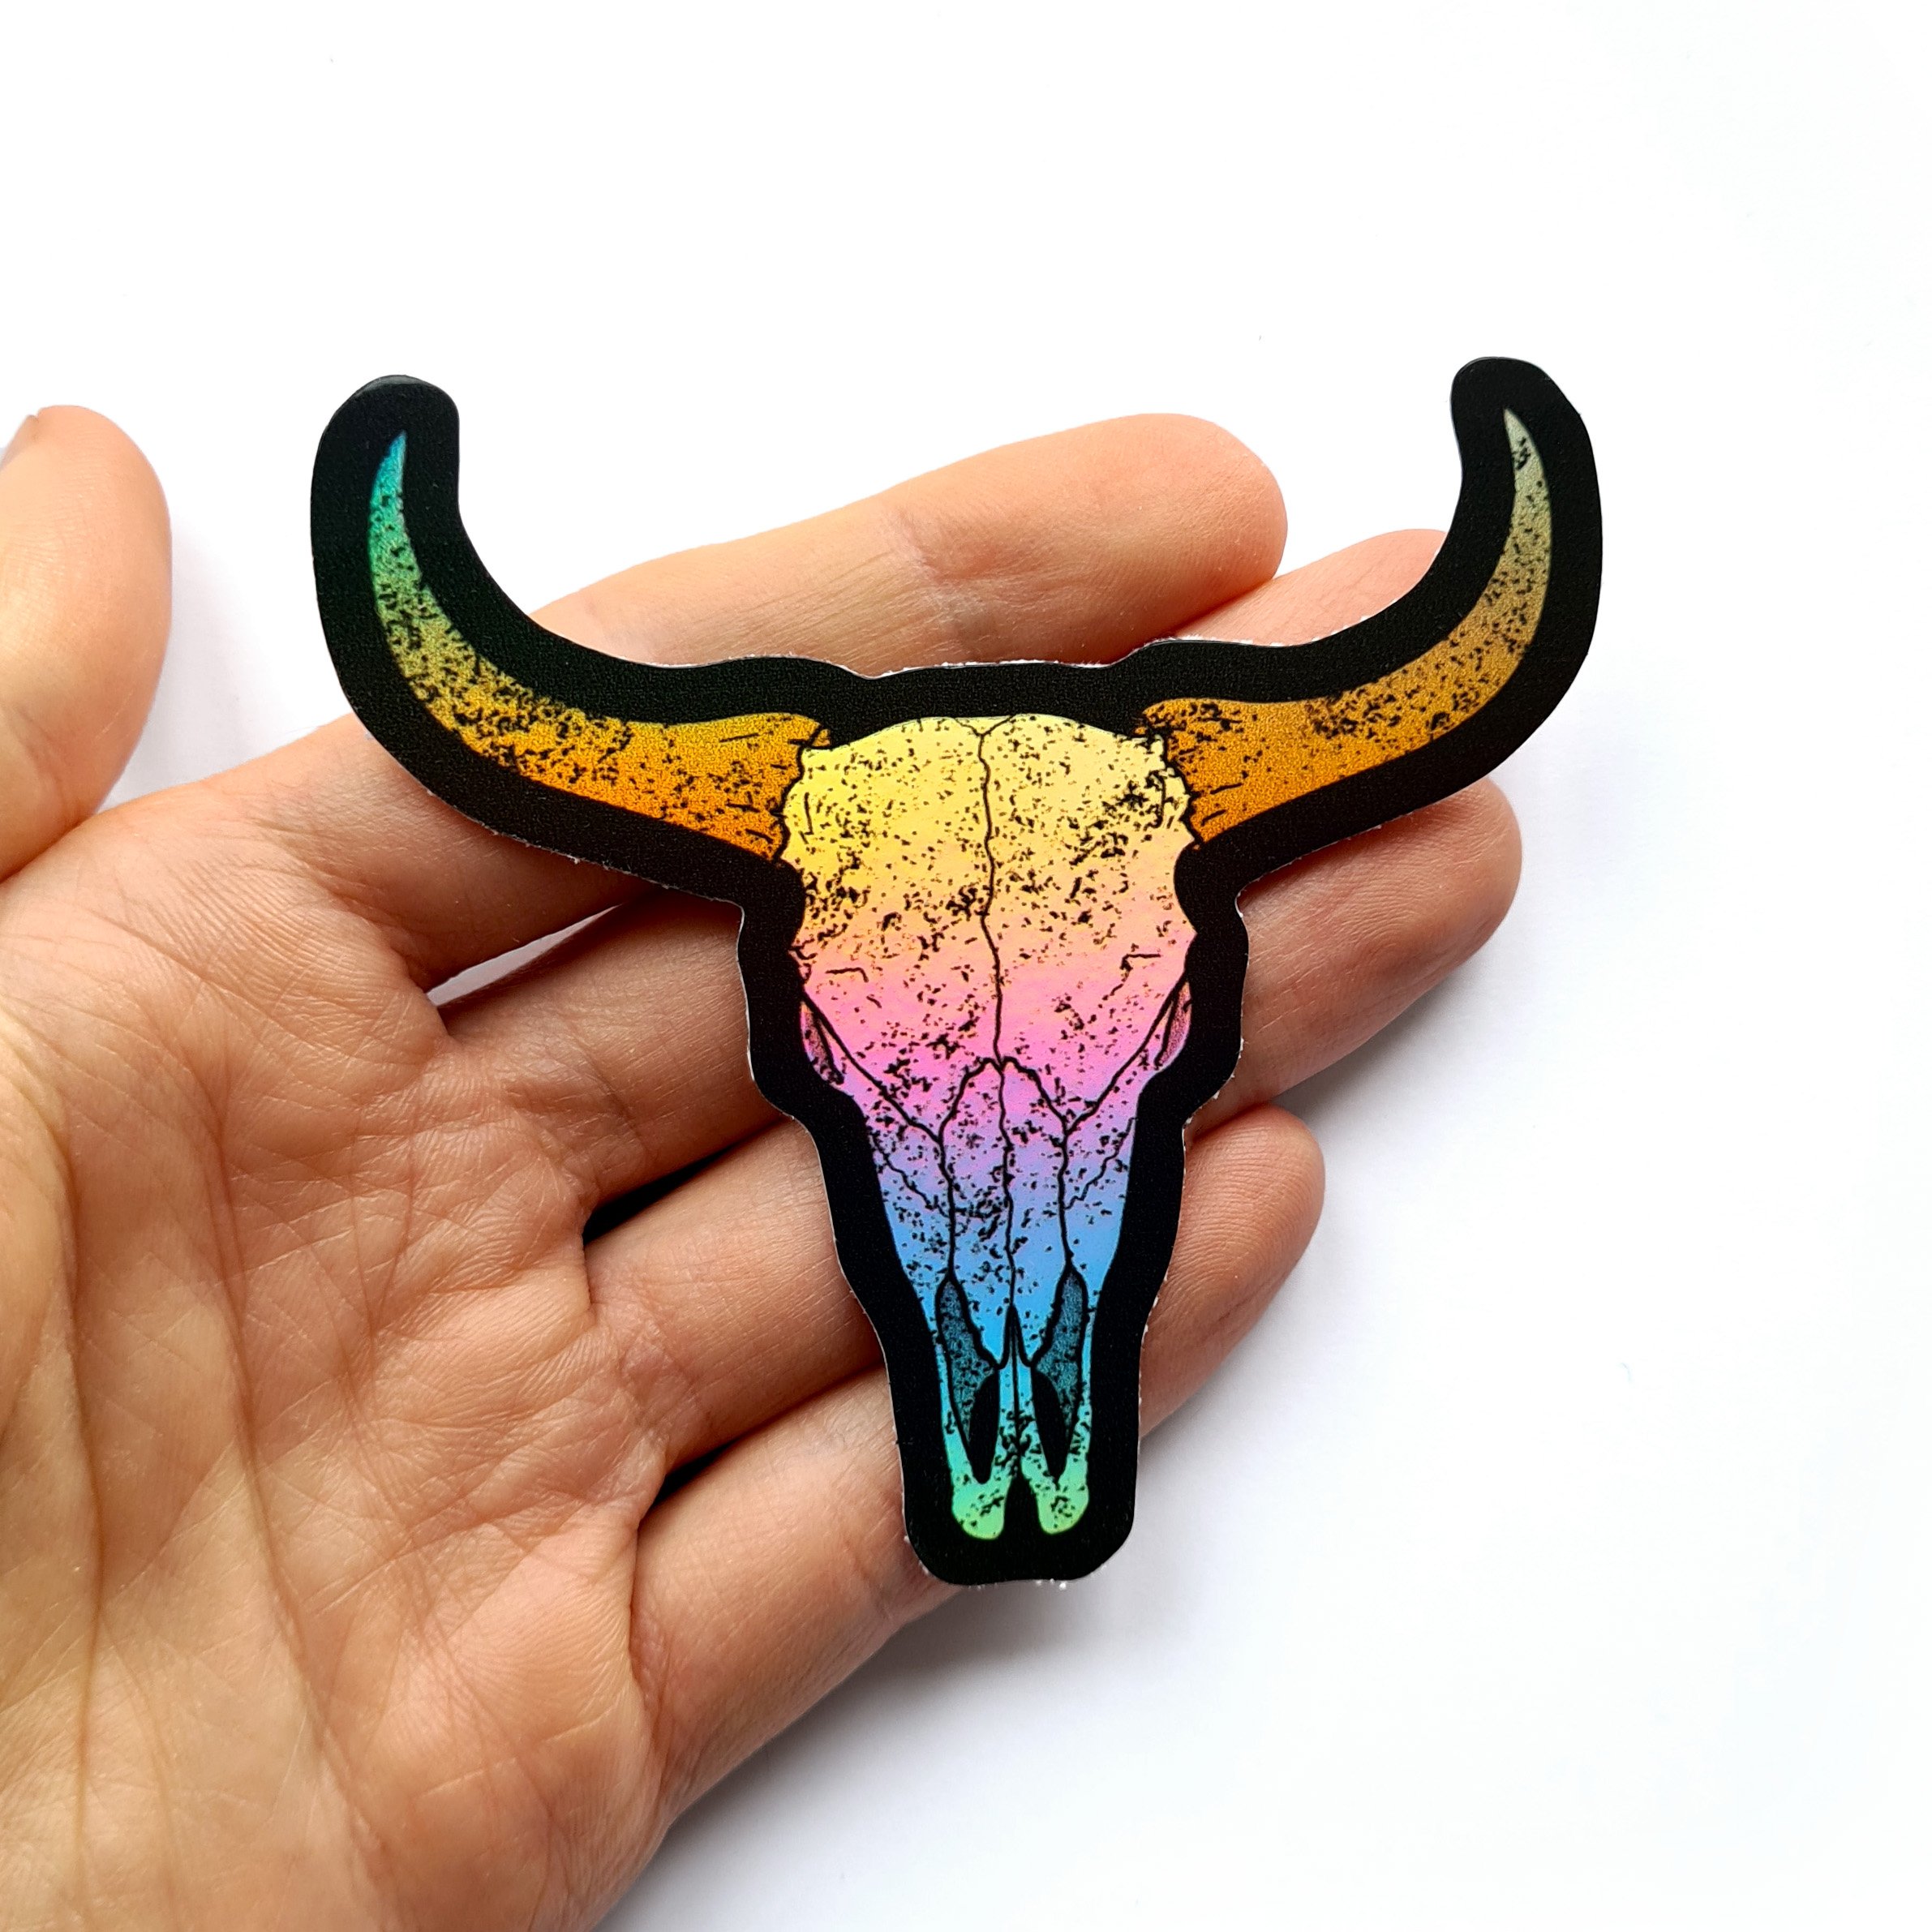 Drawn stylish image of a bull. logo, sticker Stock Vector by ©igoror  89608232